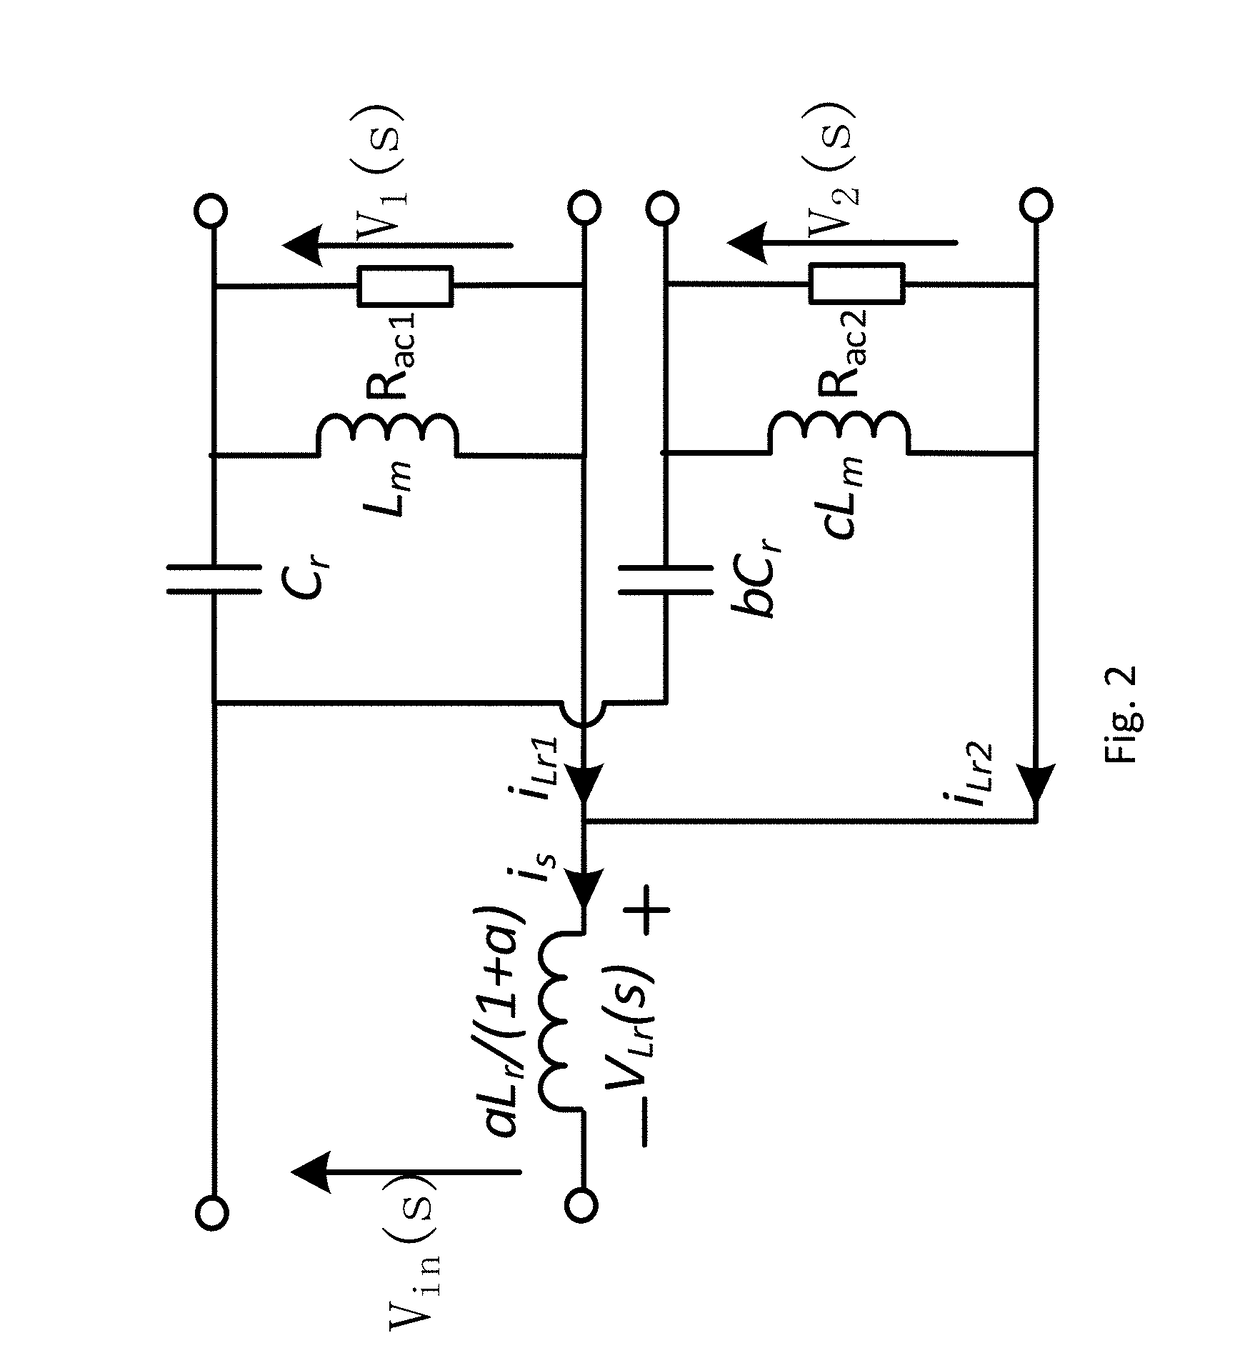 Modular parallel technique for resonant converter